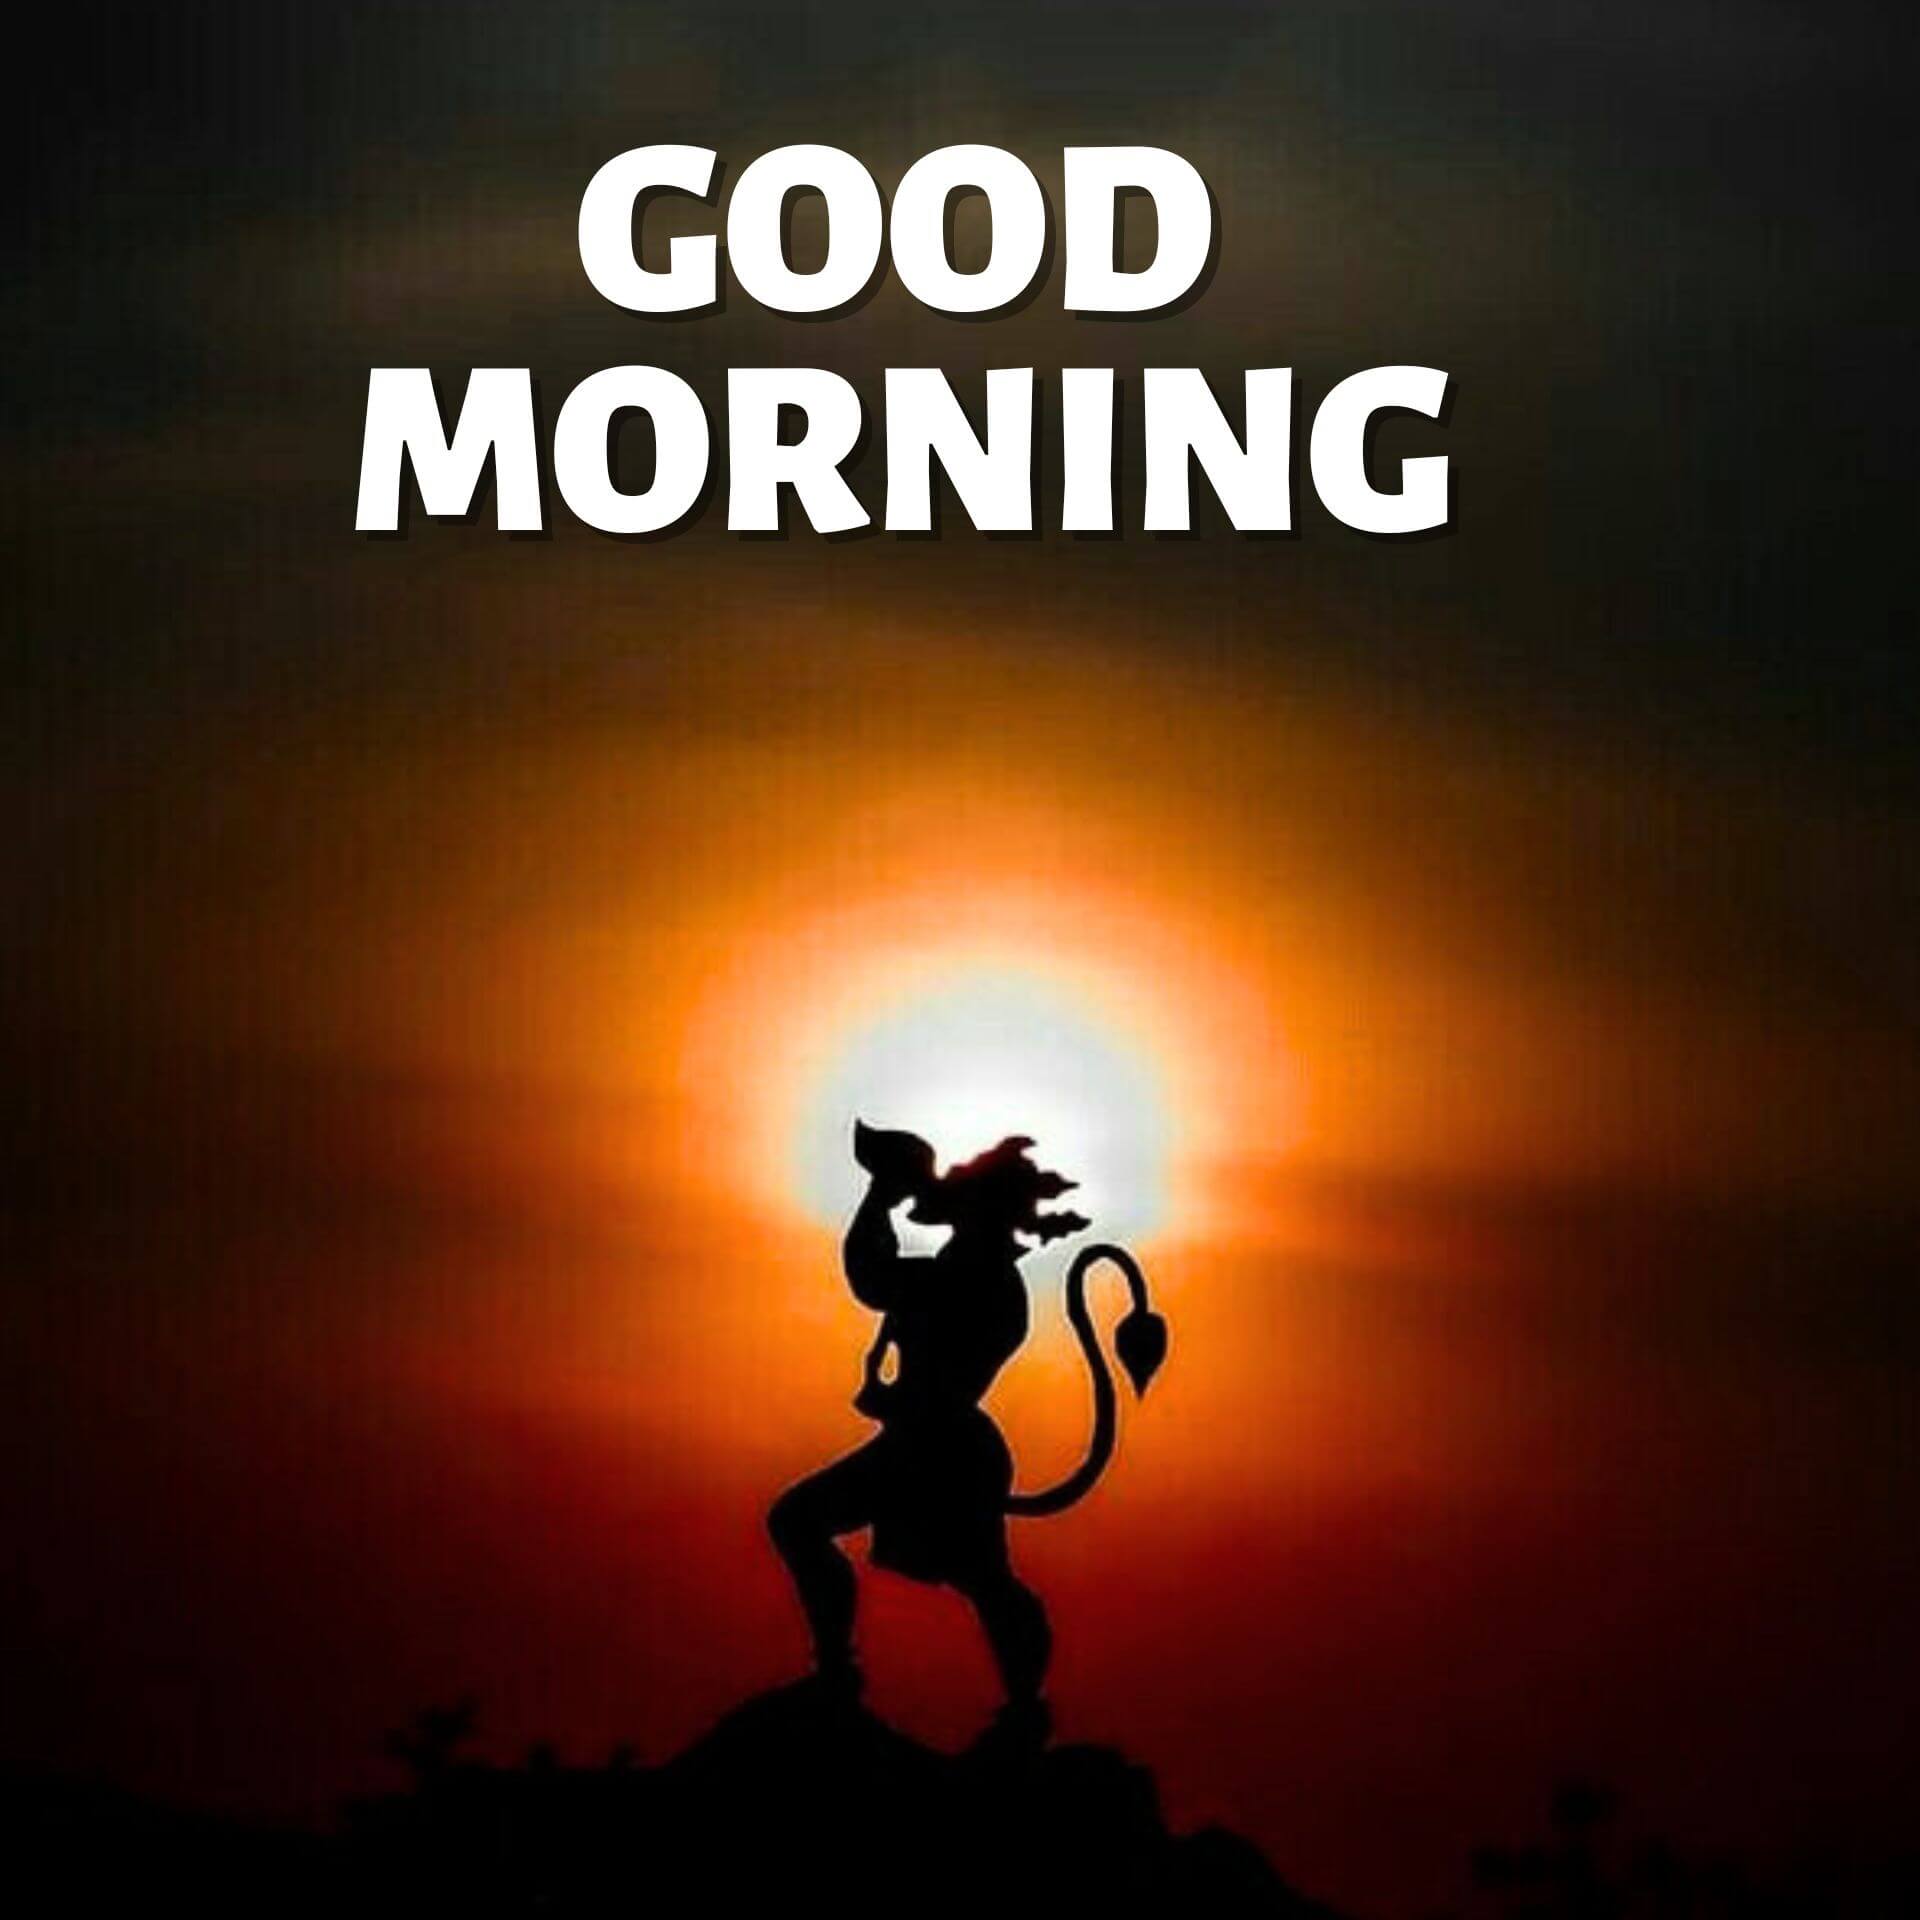 hanuman ji good morning Wallpaper Pics New Download for Facebook